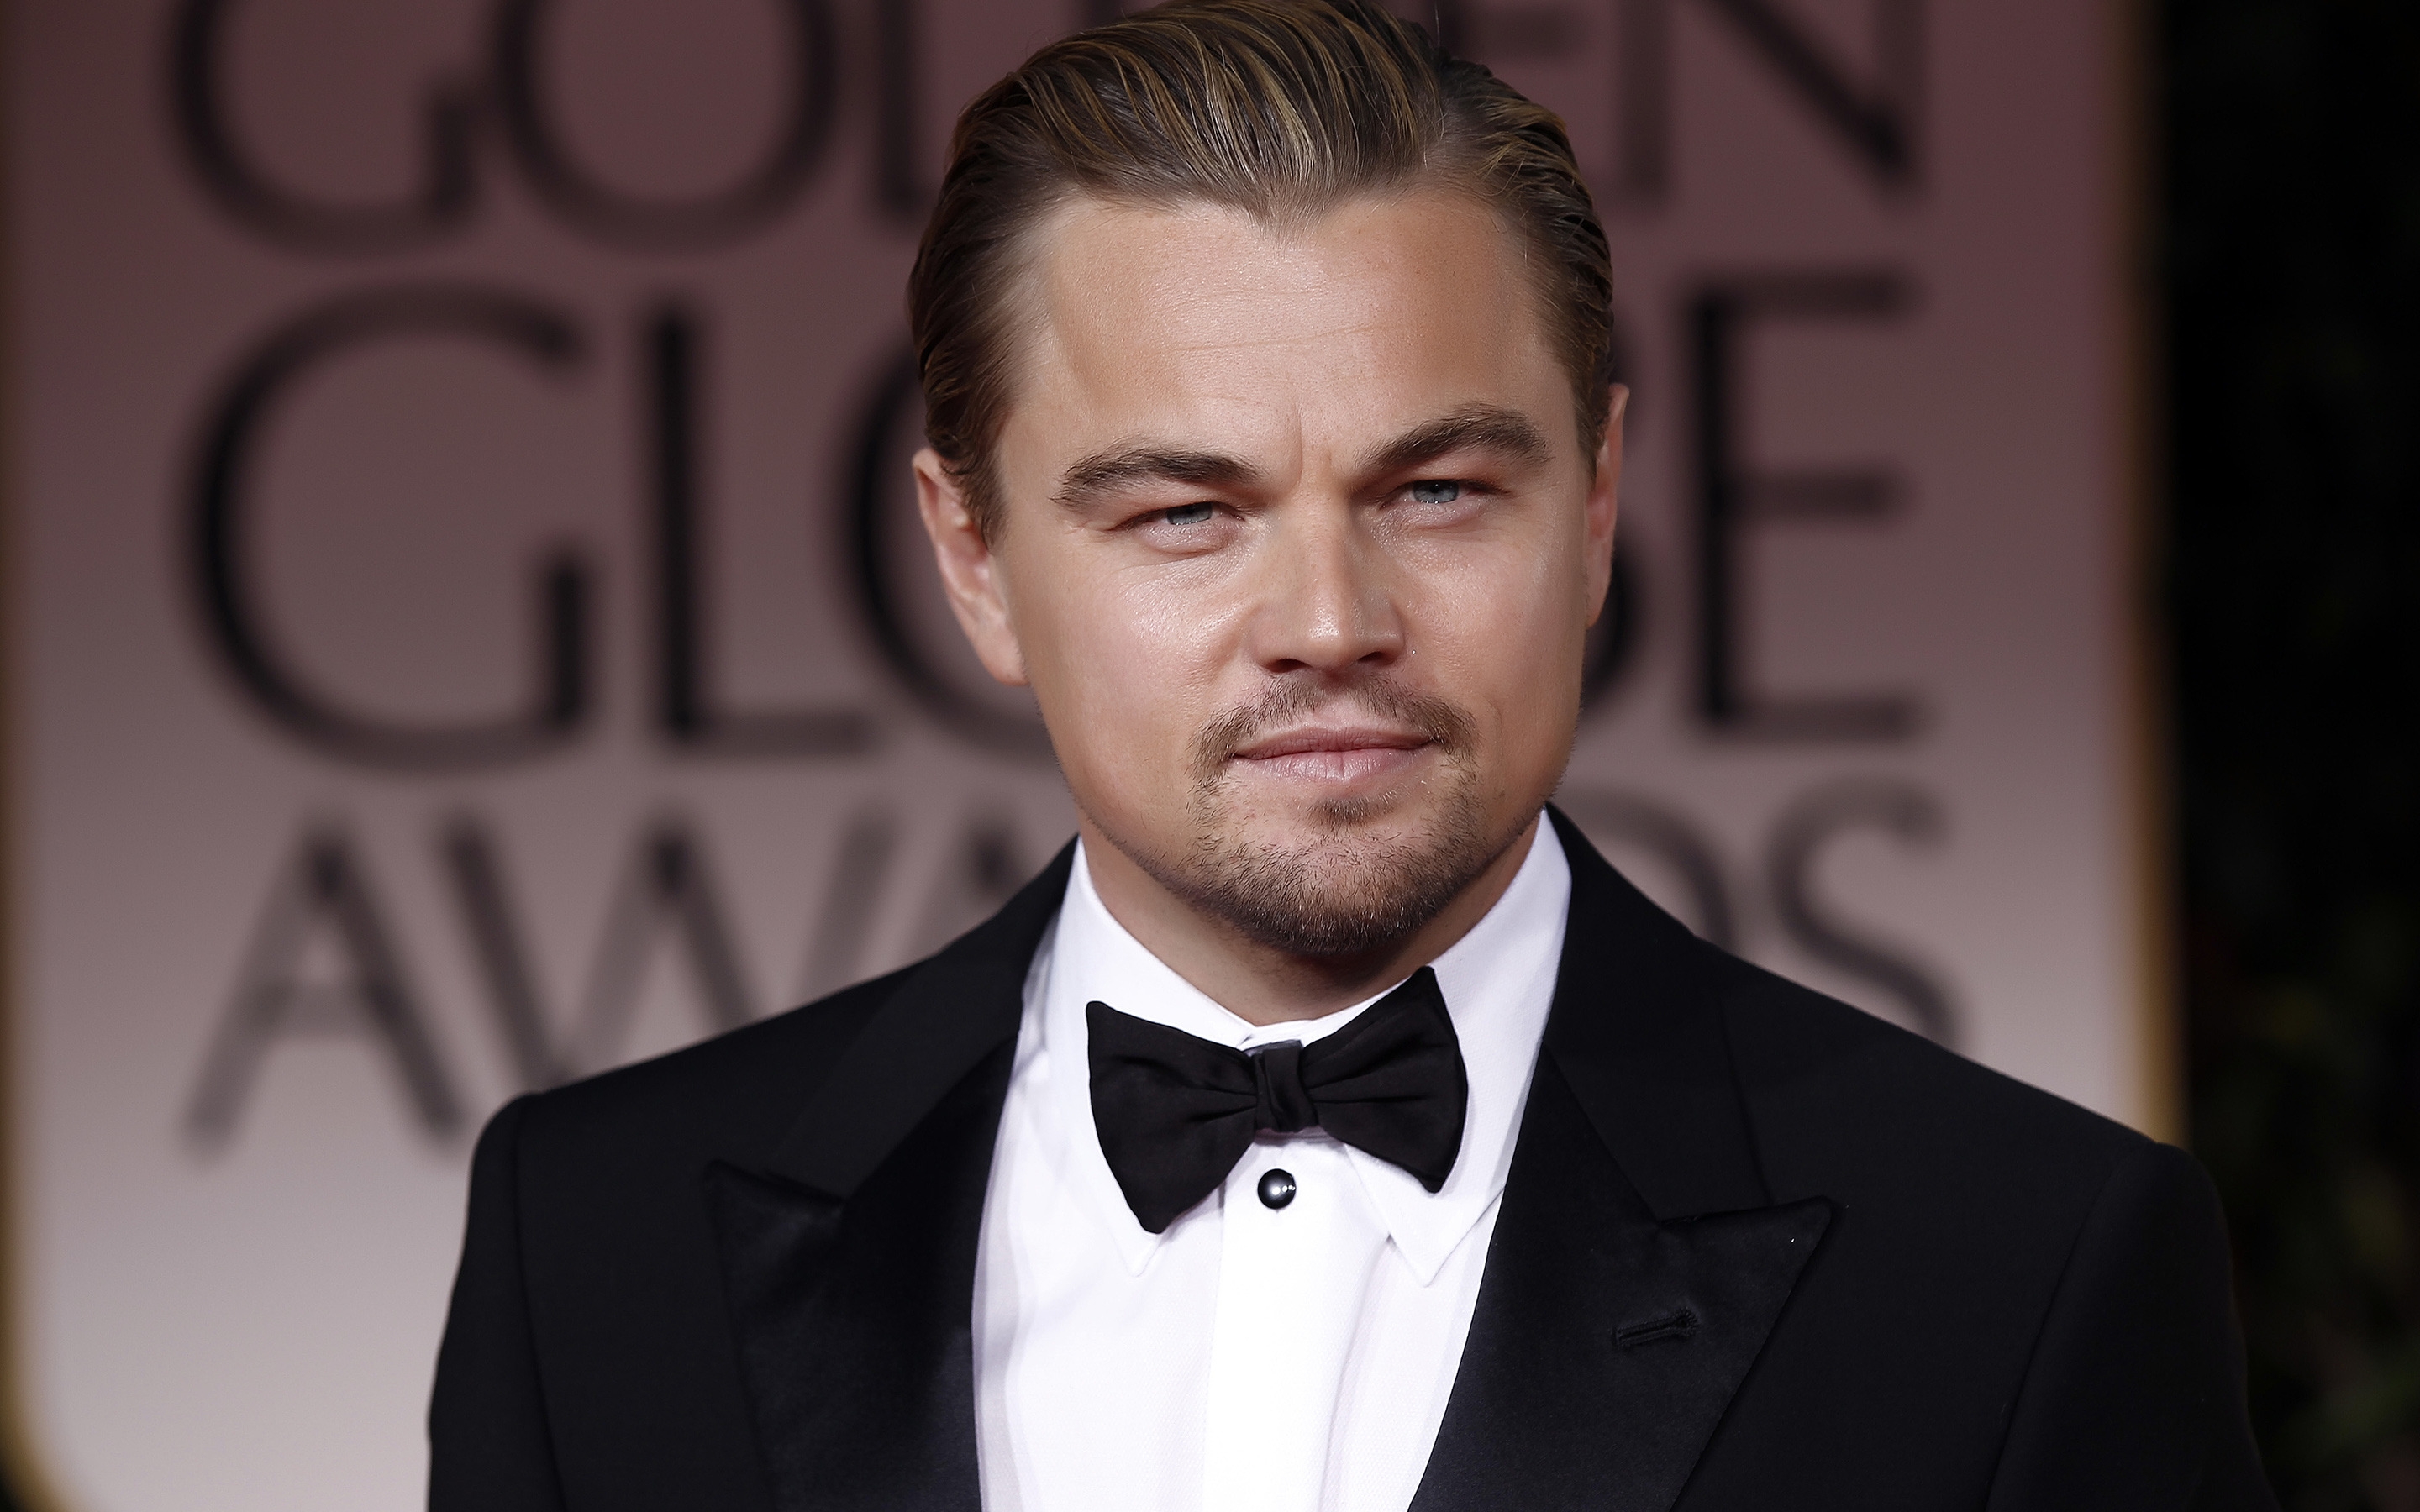 Leonardo DiCaprio in Tuxedo for 2880 x 1800 Retina Display resolution